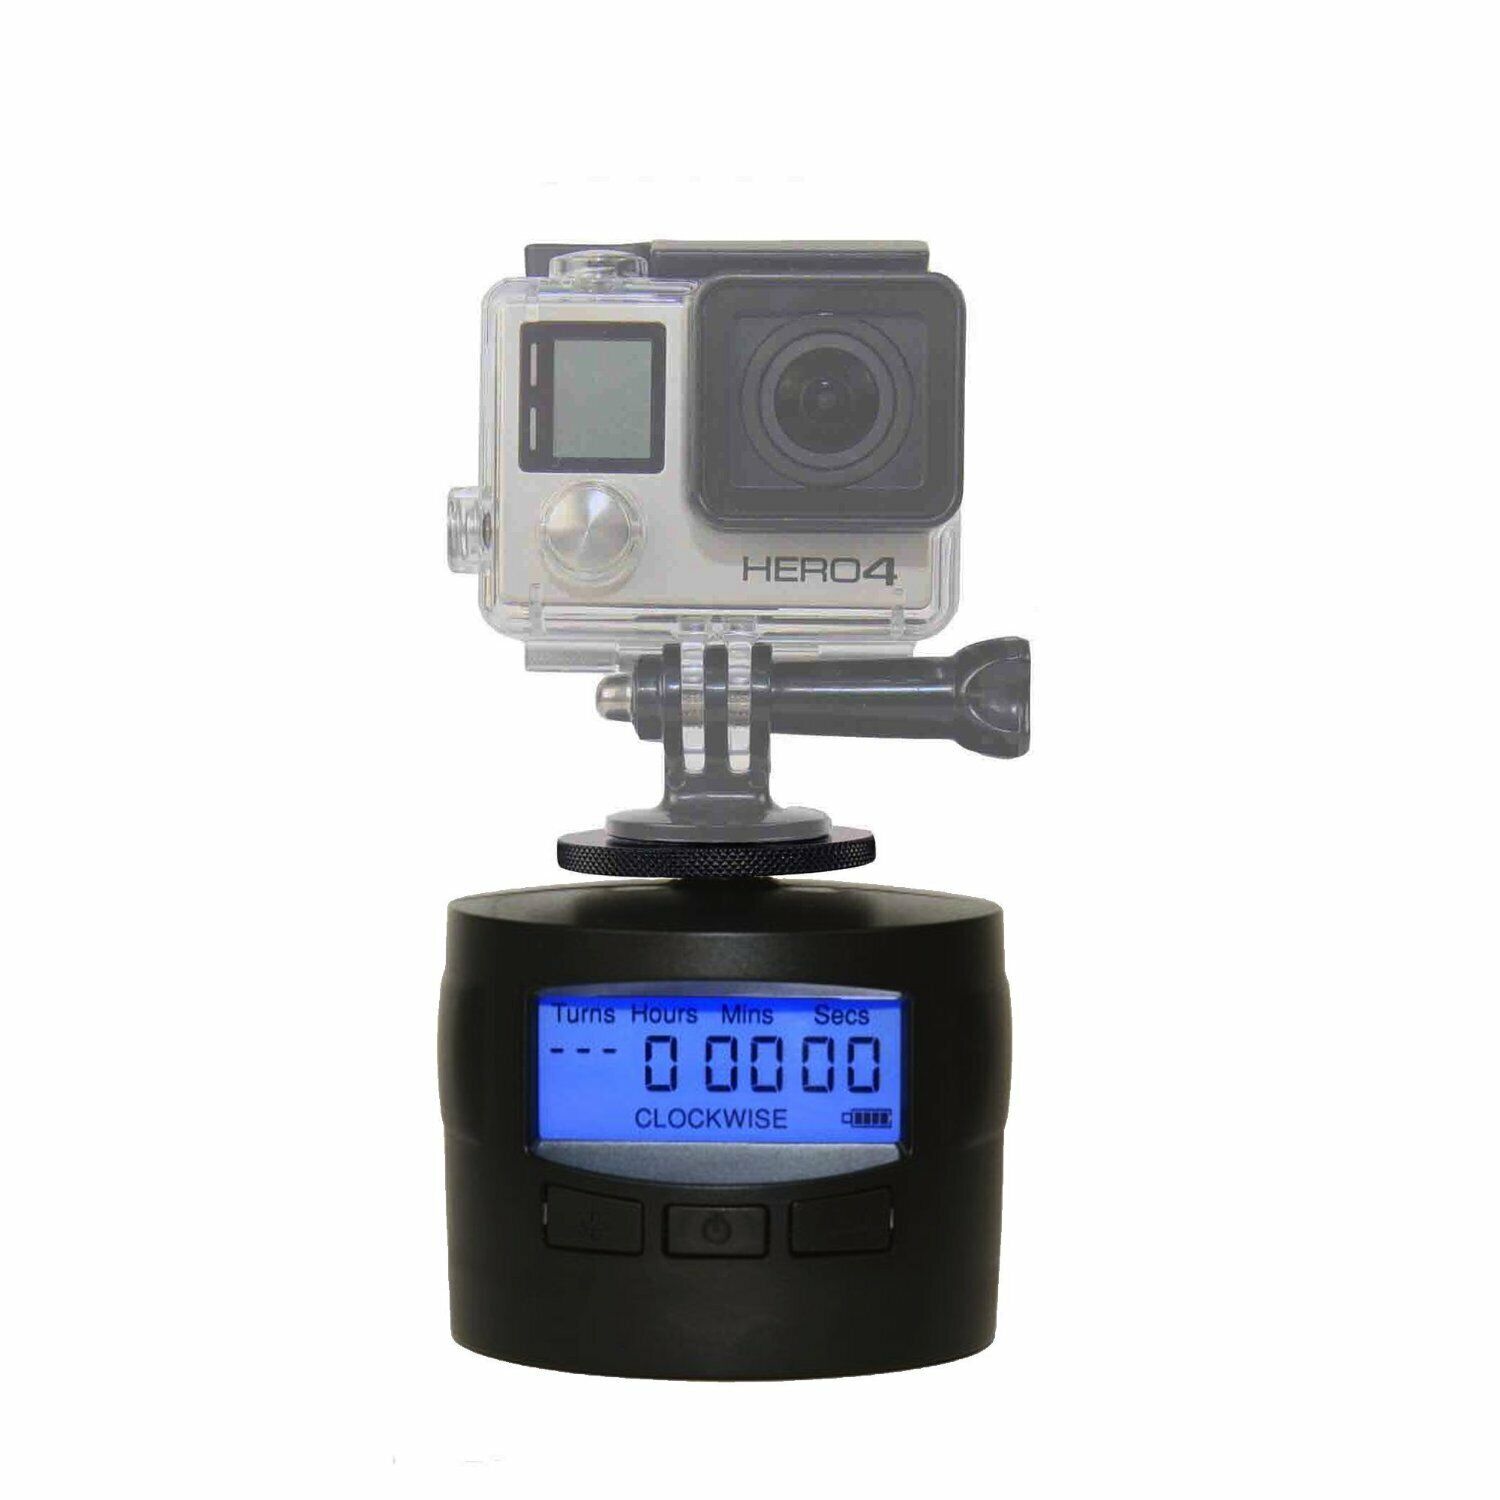 TurnsPro - 360° Timelapse Panning device for GoPro Cameras | DSLR | Smart Phone